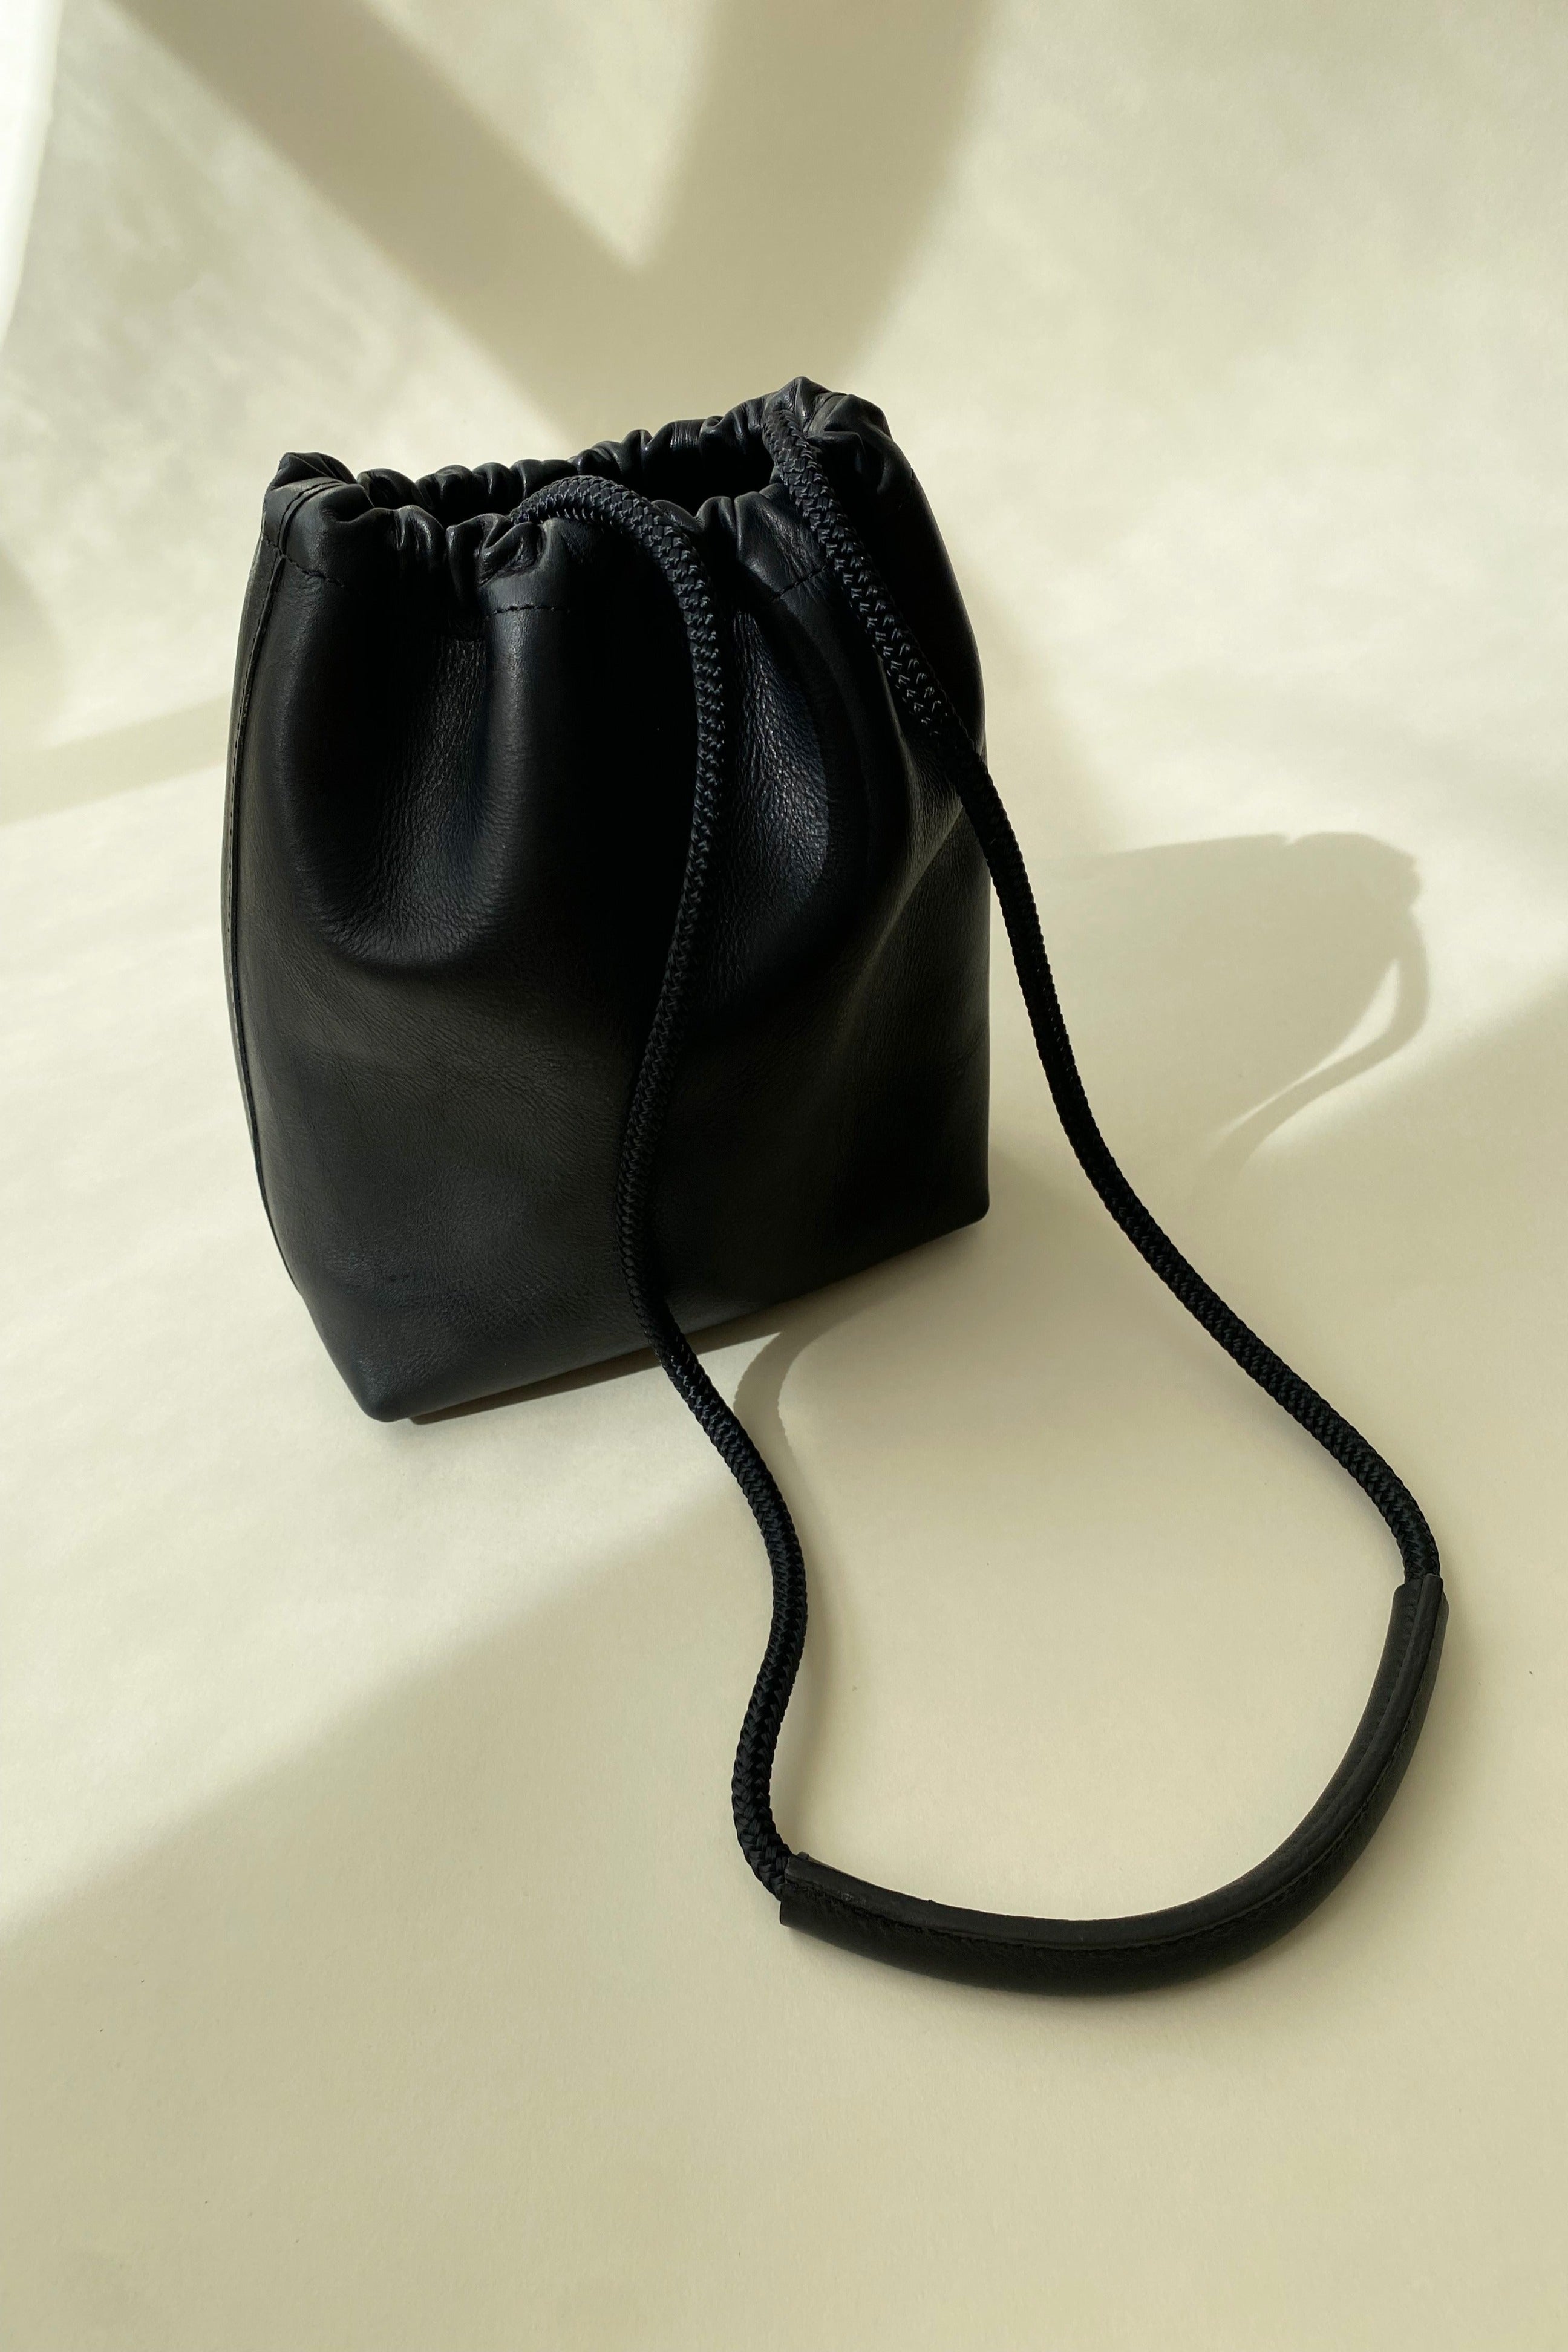 🎀 Ank Rouge PINK version lace & ribbon 2-way handbag... - Depop | Real  leather handbags, Pu leather bag, Woman bags handbags